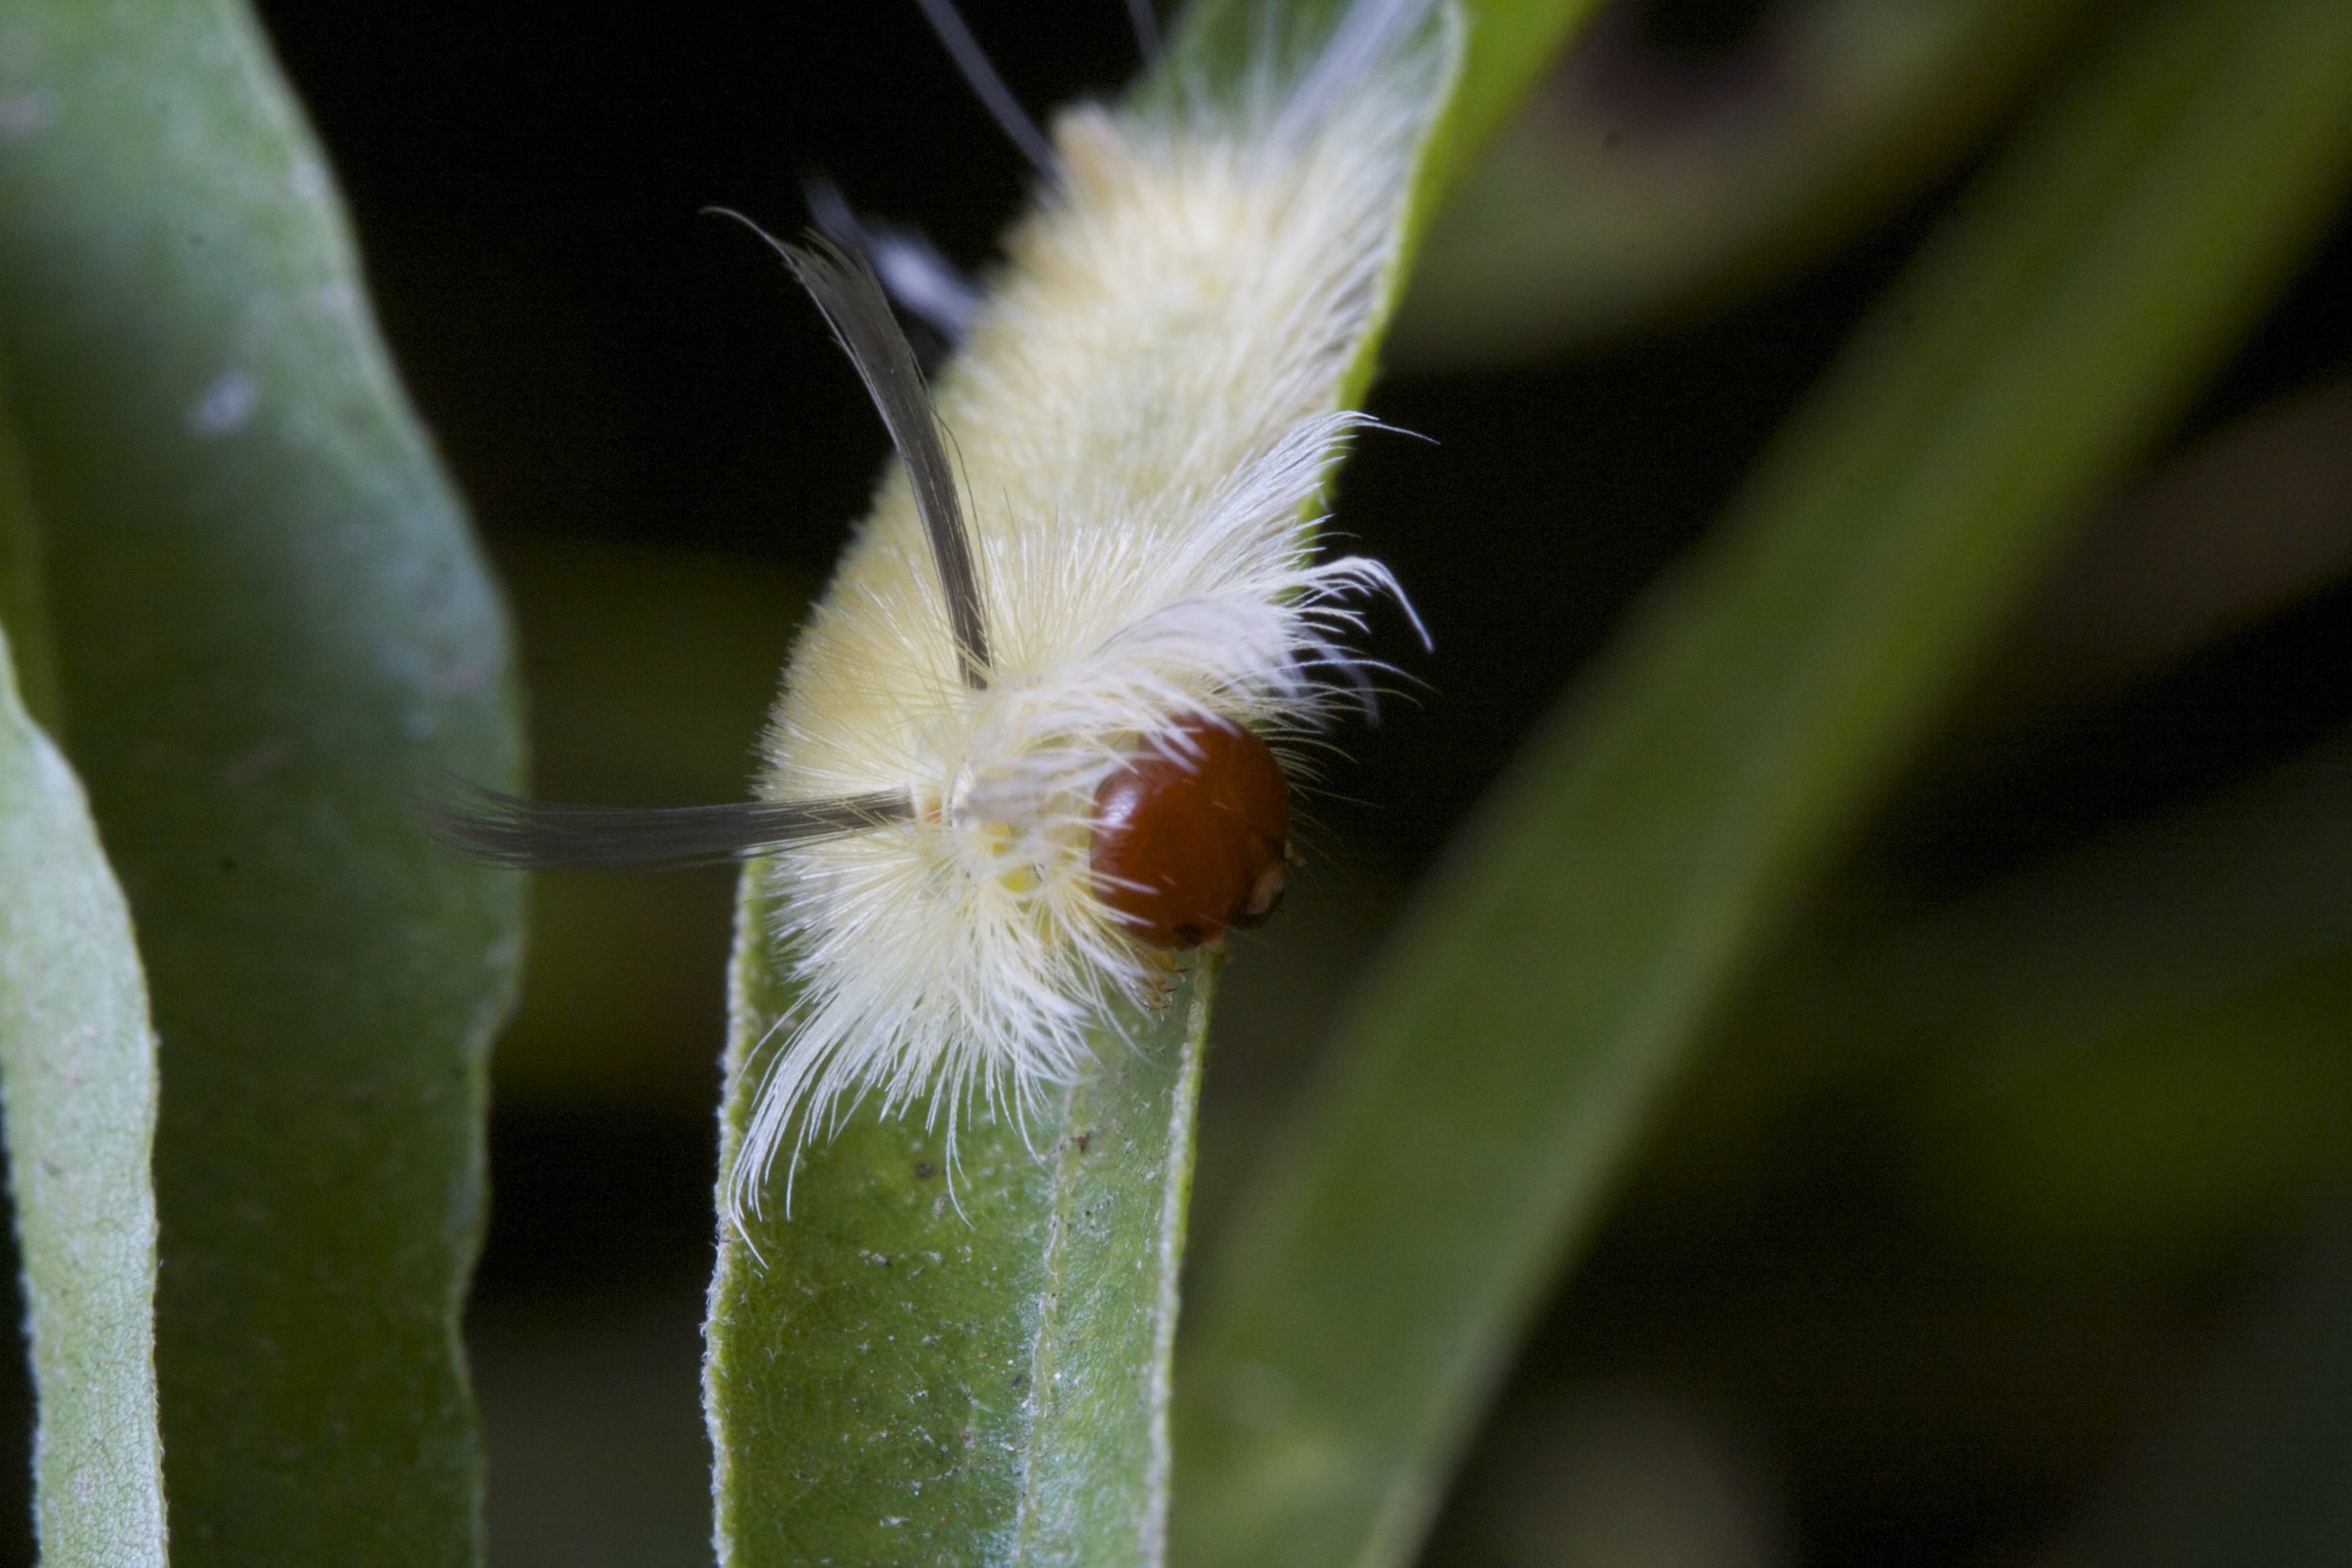 A tussock moth caterpillar often found on willow oak